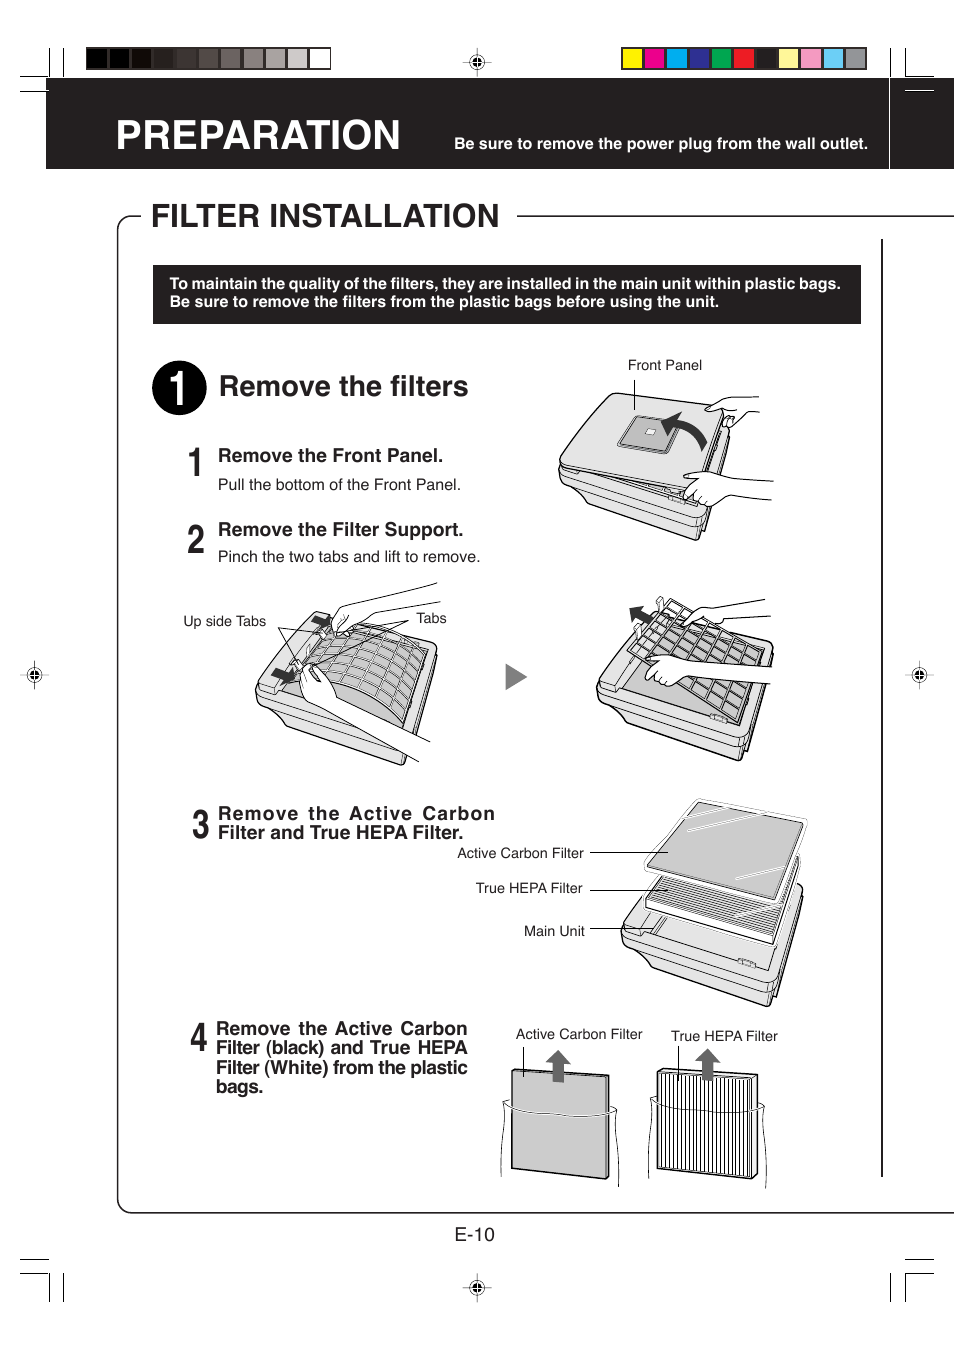 Preparation, Filter installation, Remove the filters | Sharp FP-R30CX Manuel d'utilisation | Page 12 / 40